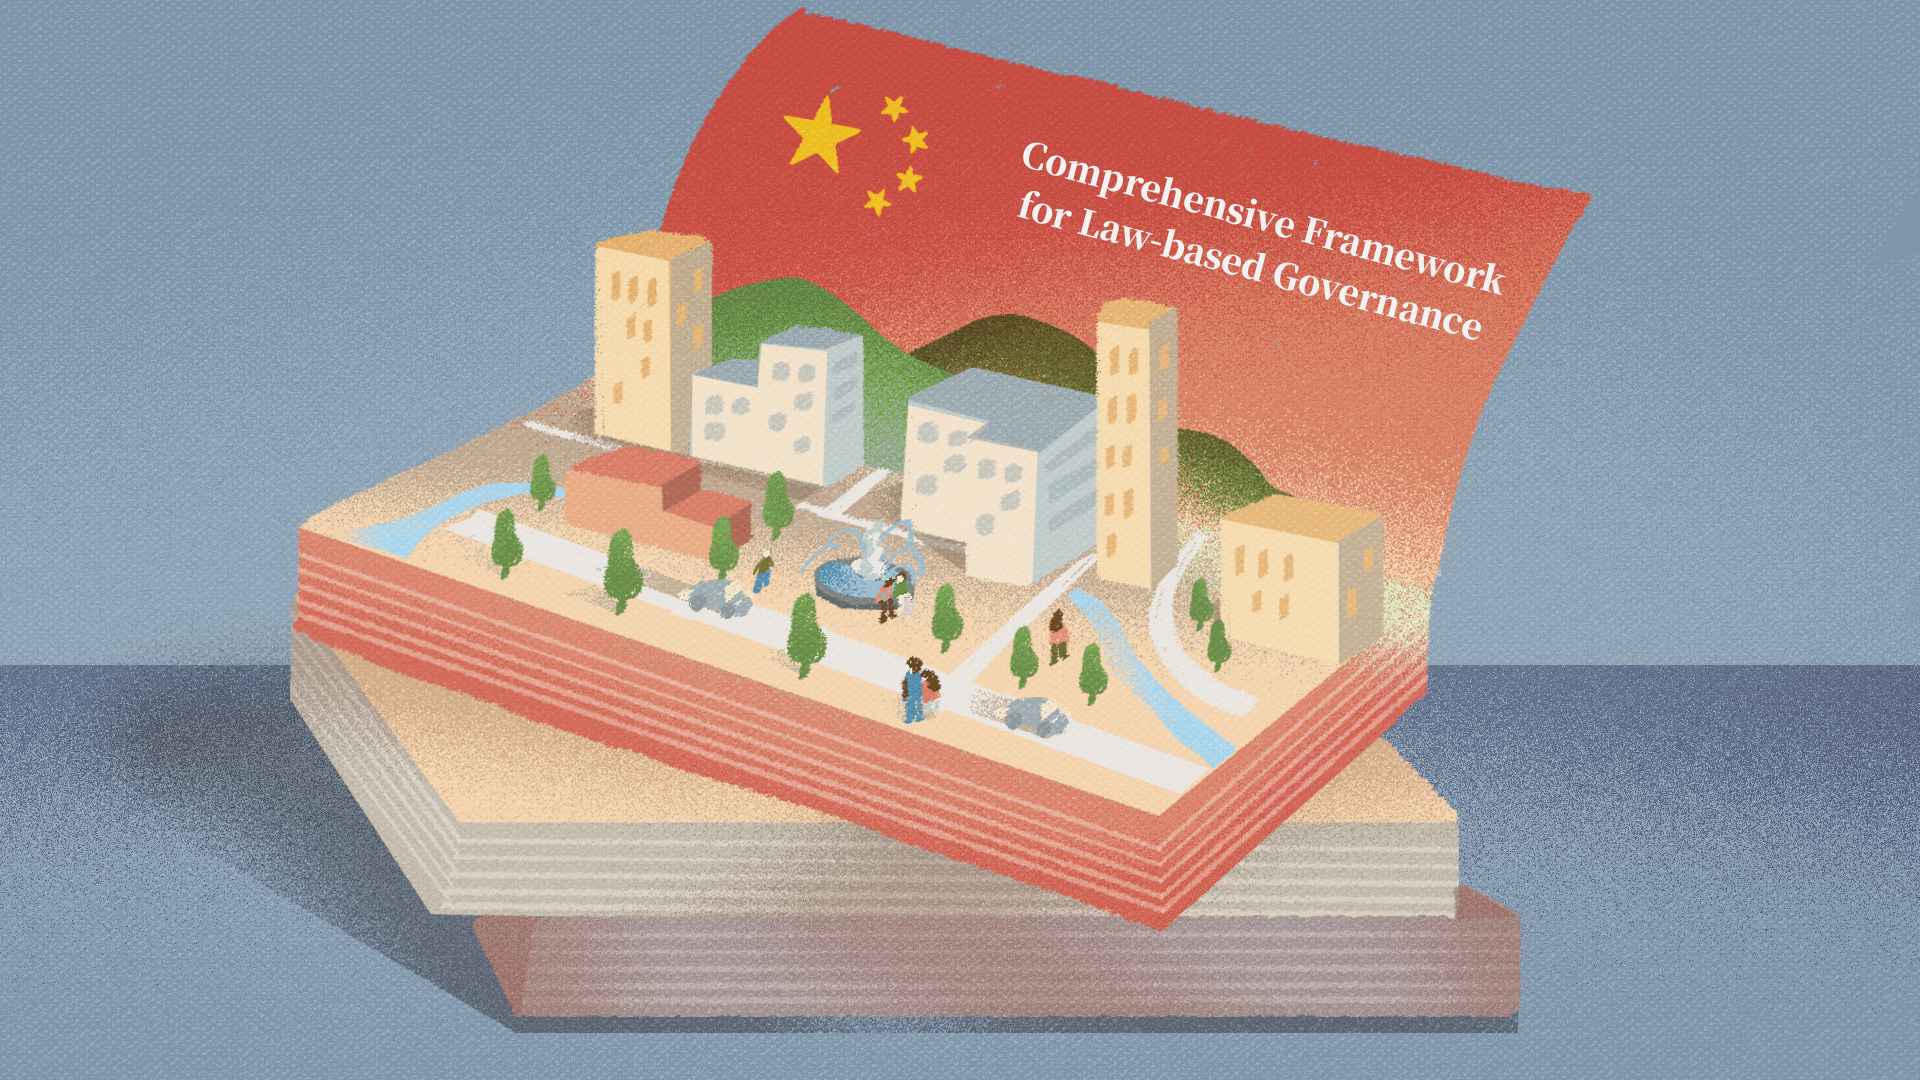 China's comprehensive framework for law-based governance takes shape